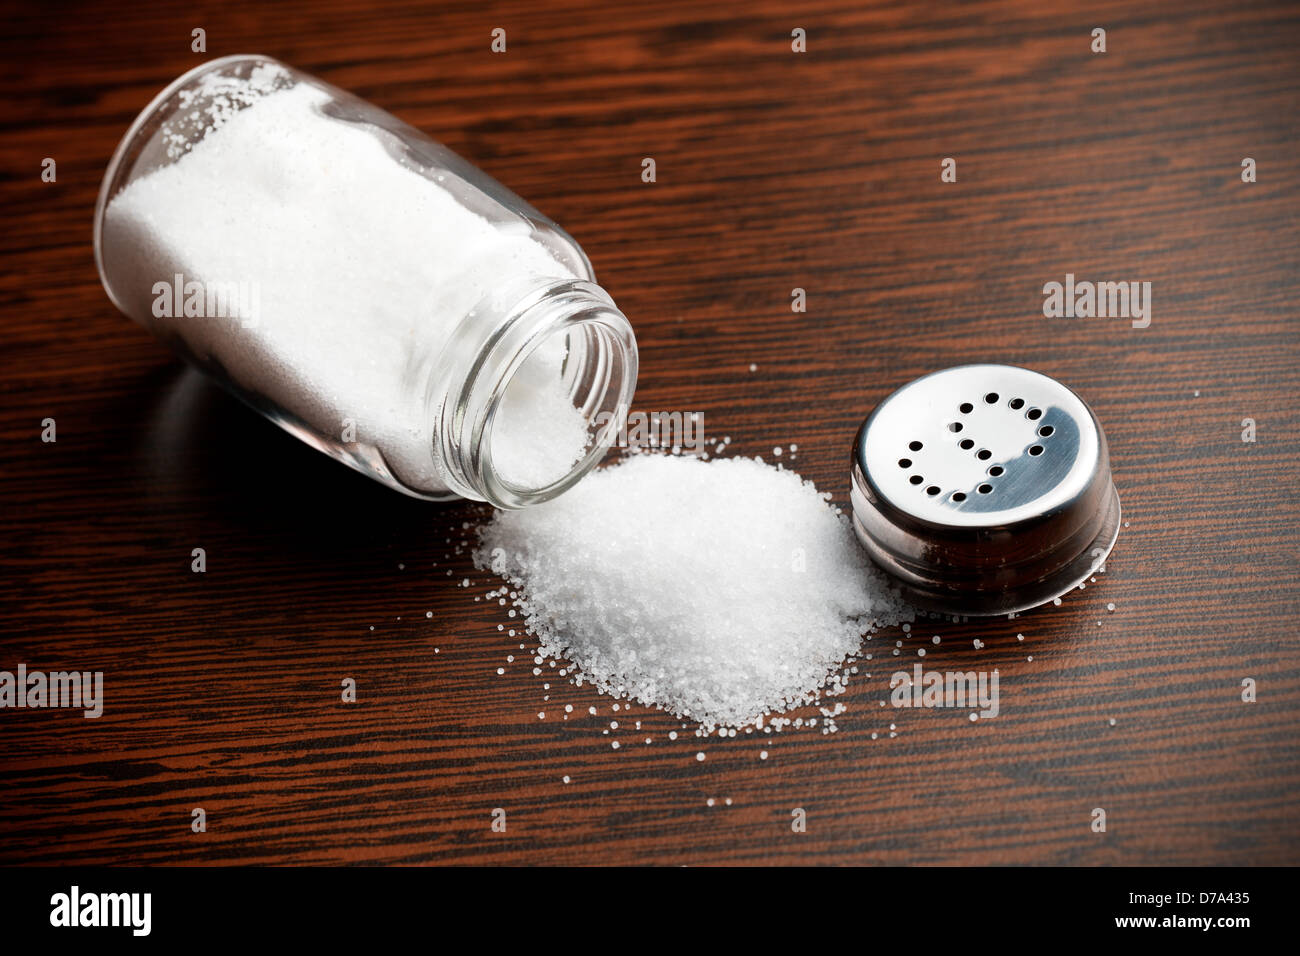 salt sprinkled on wooden table Stock Photo